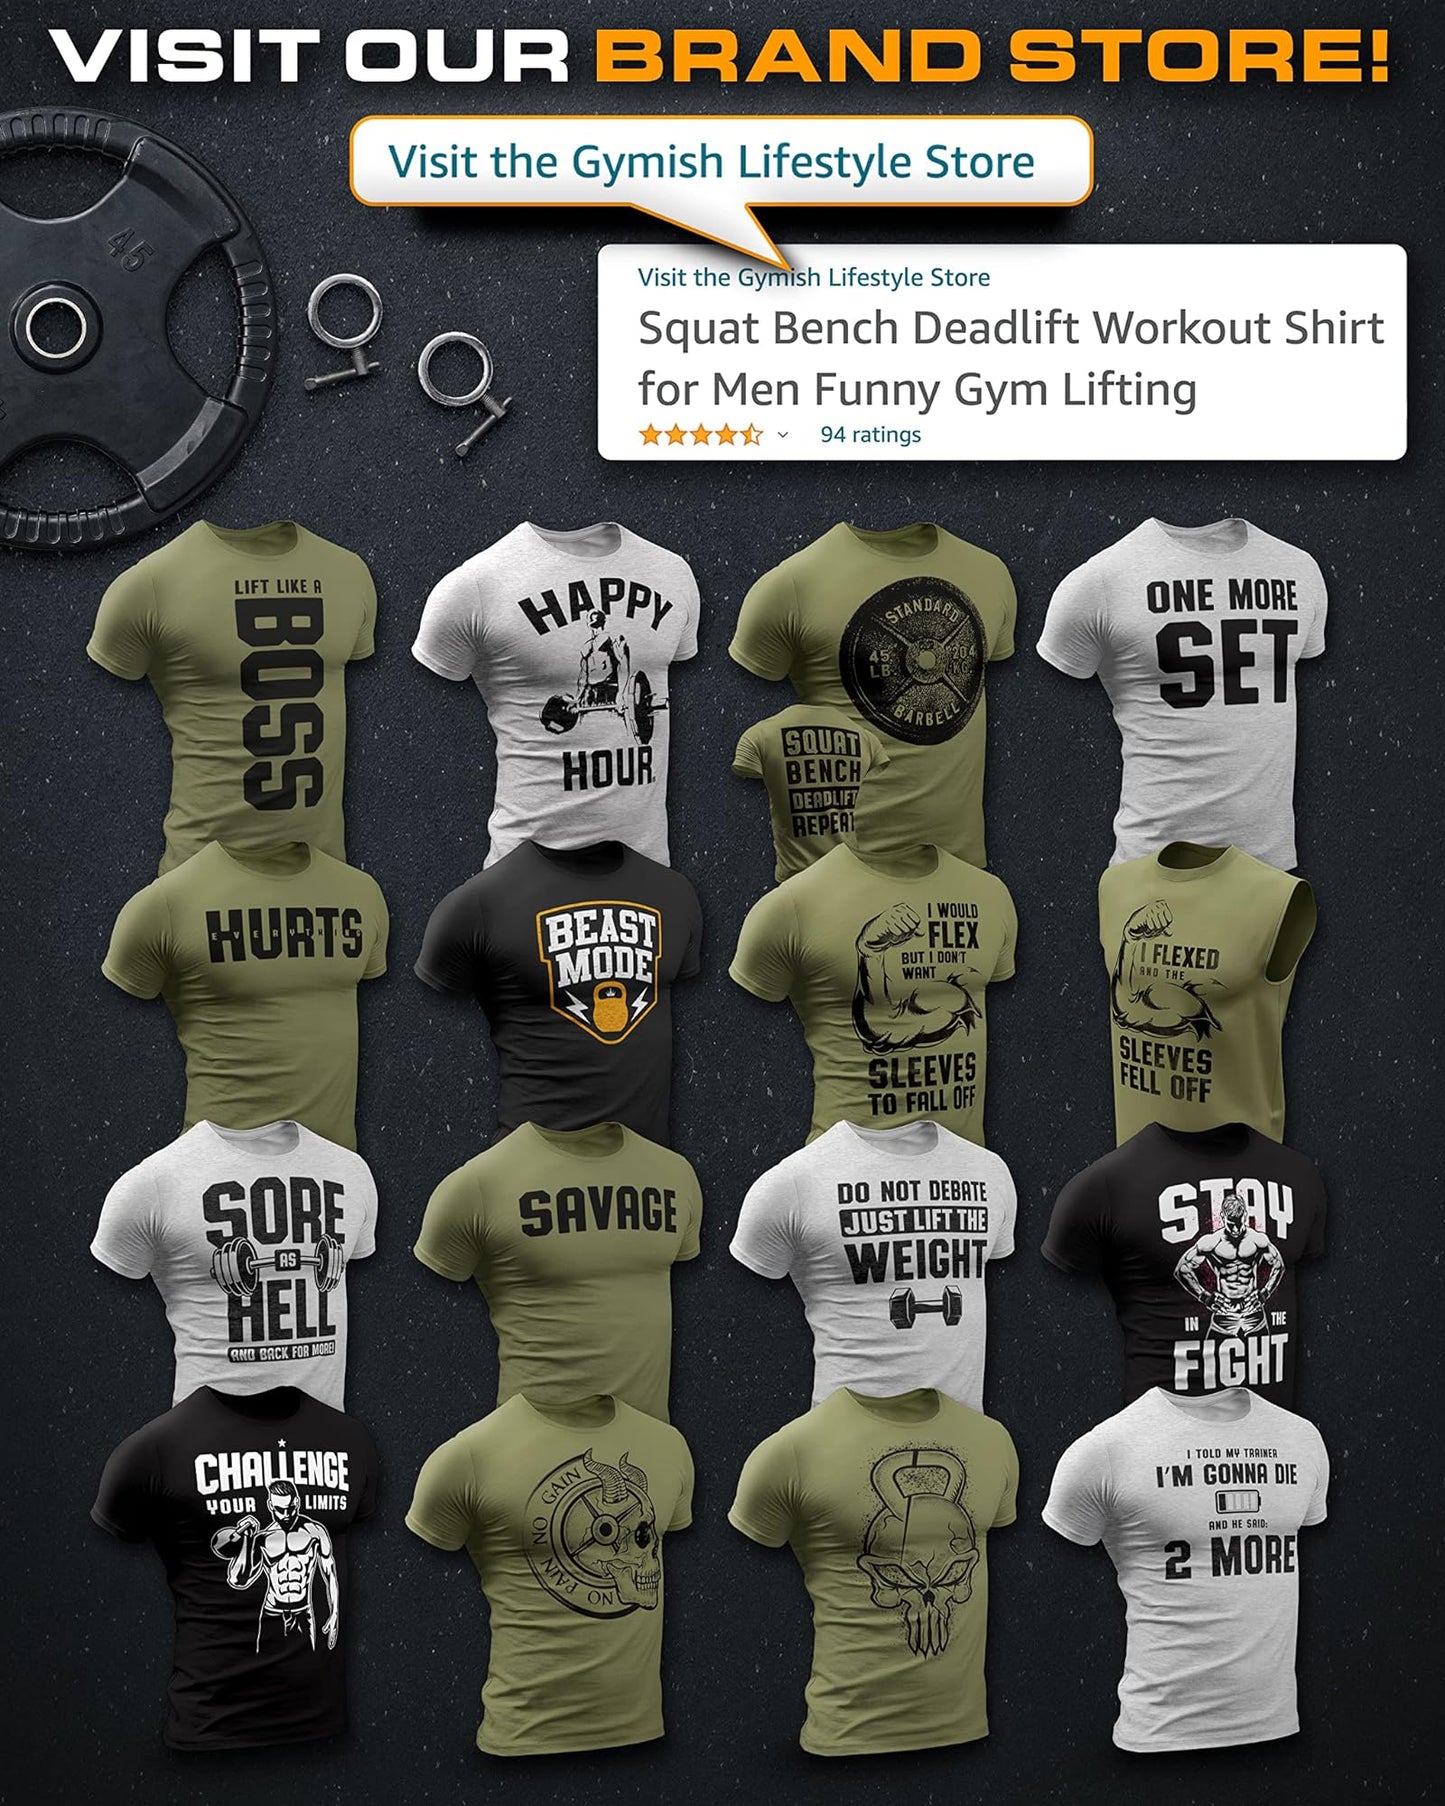 065. Savage Not Average Workout T-Shirt